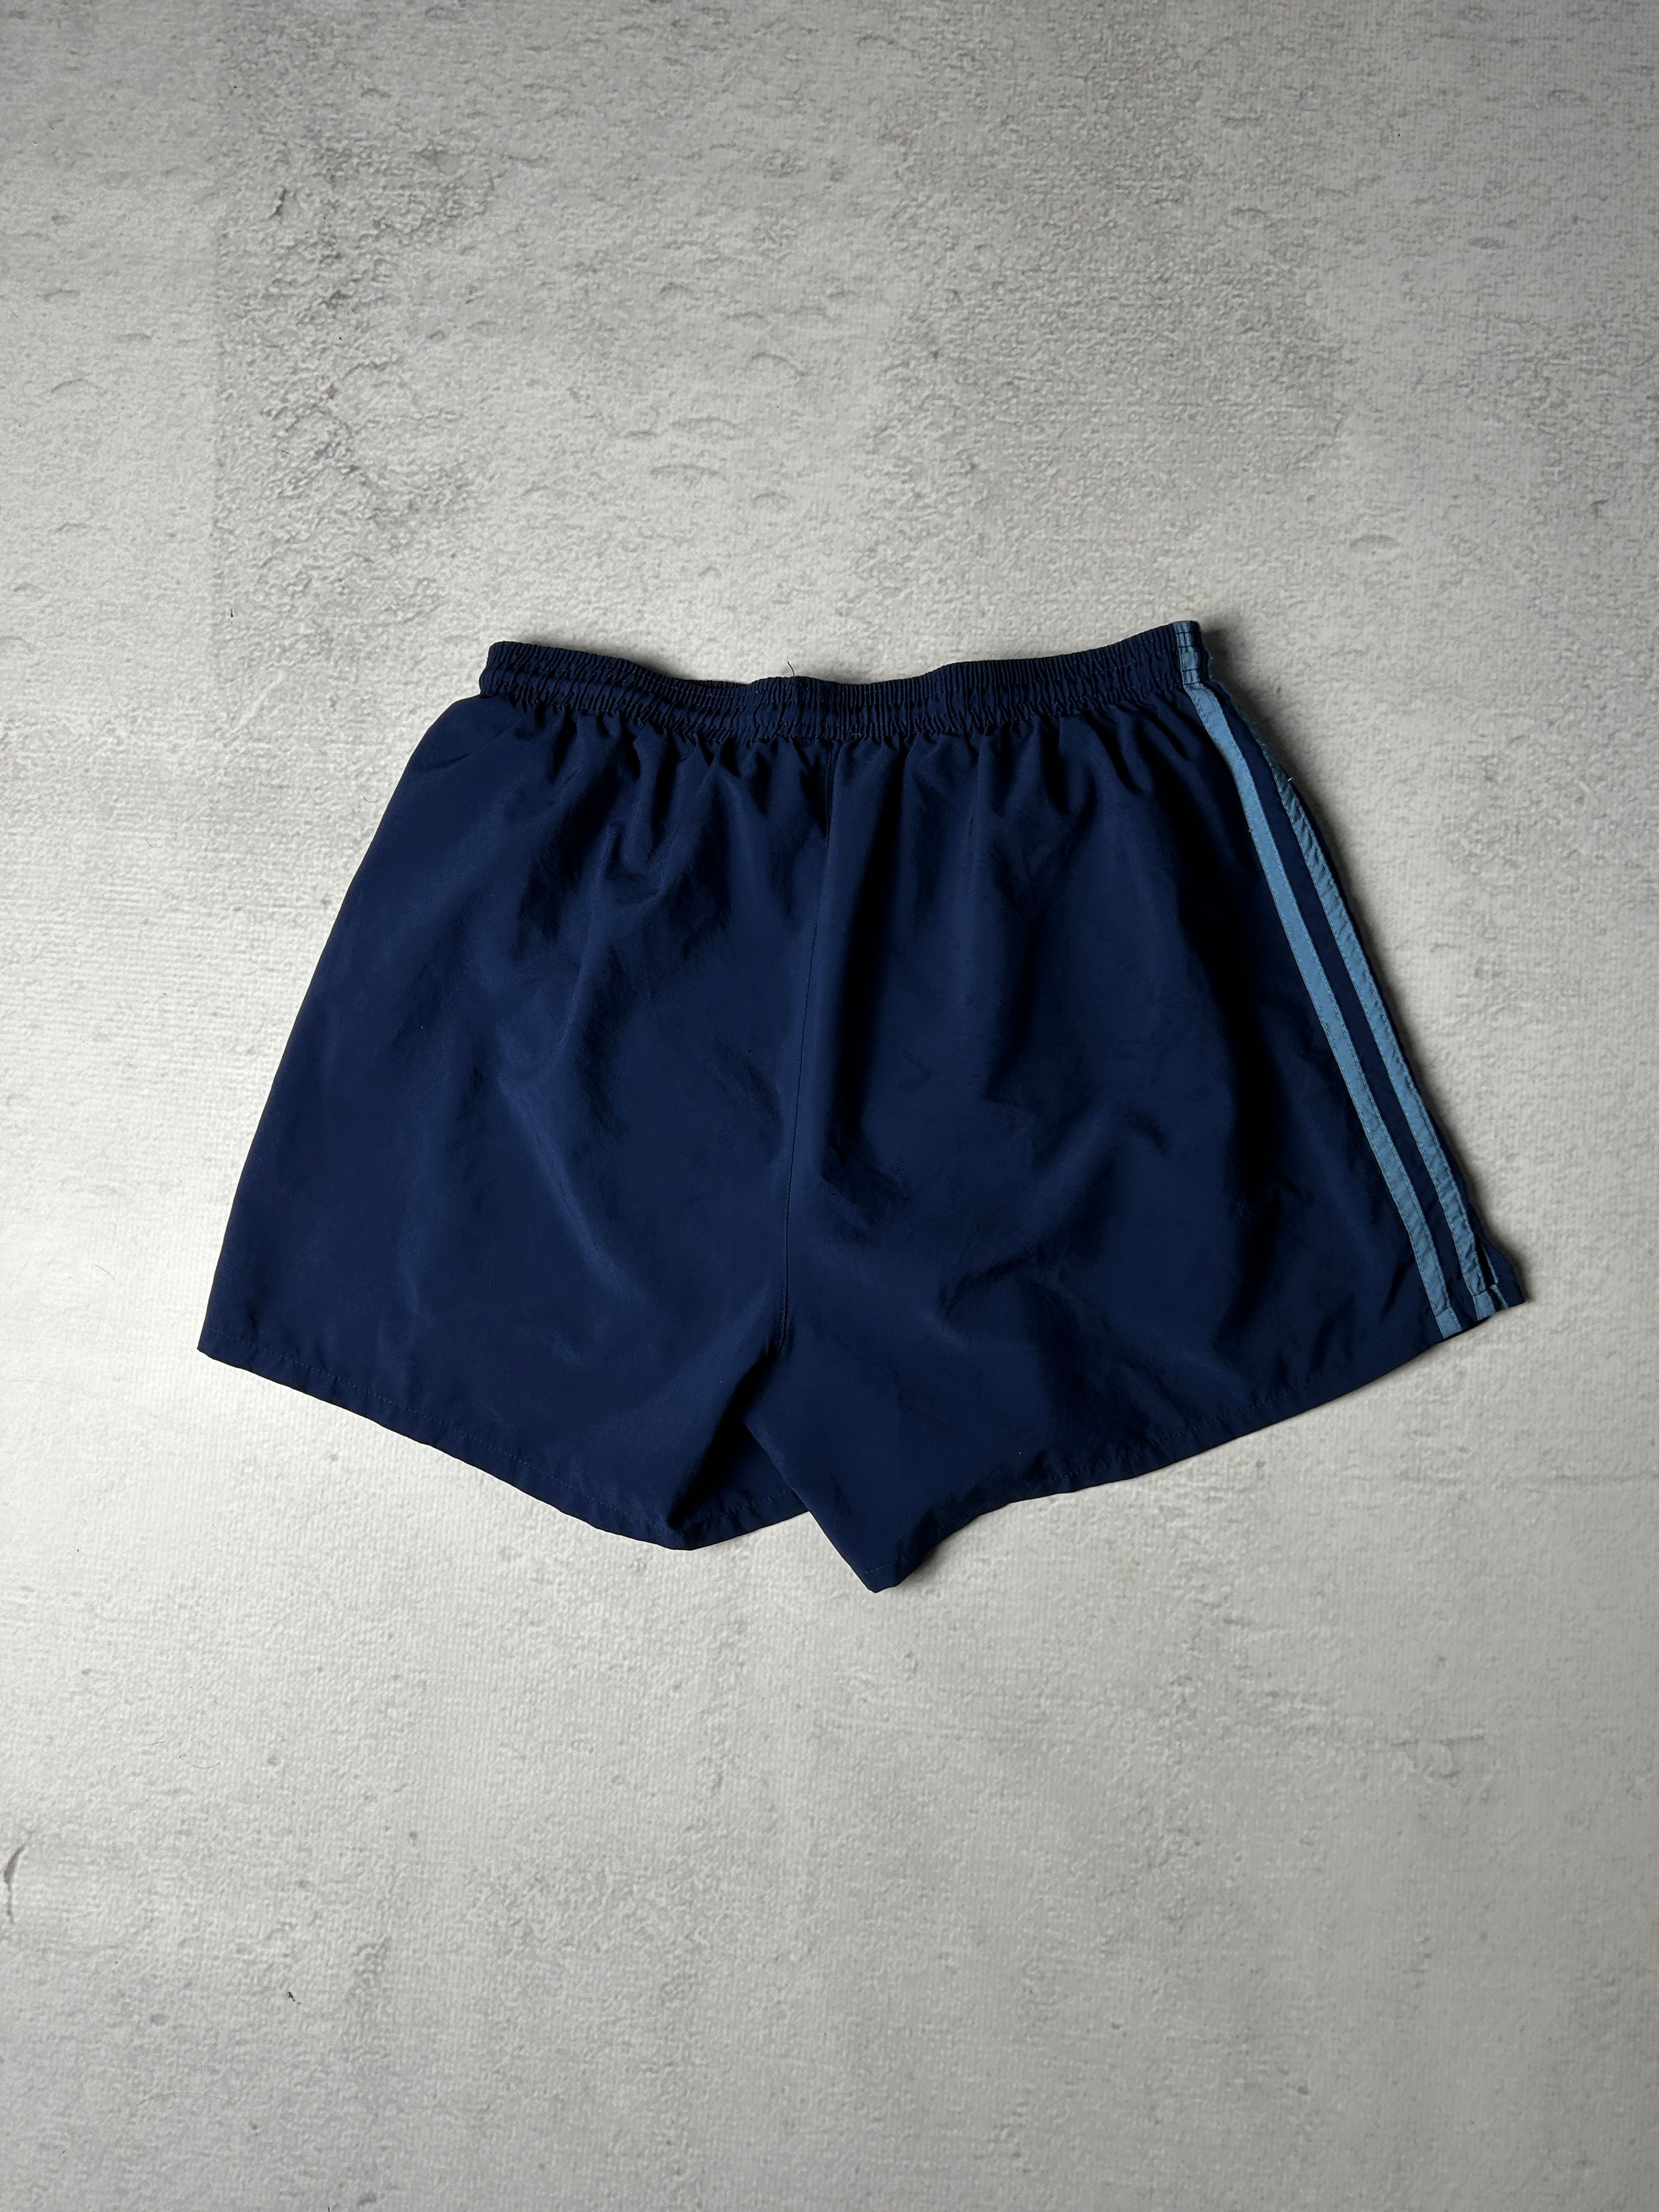 Vintage Adidas Track Shorts - Women's XL